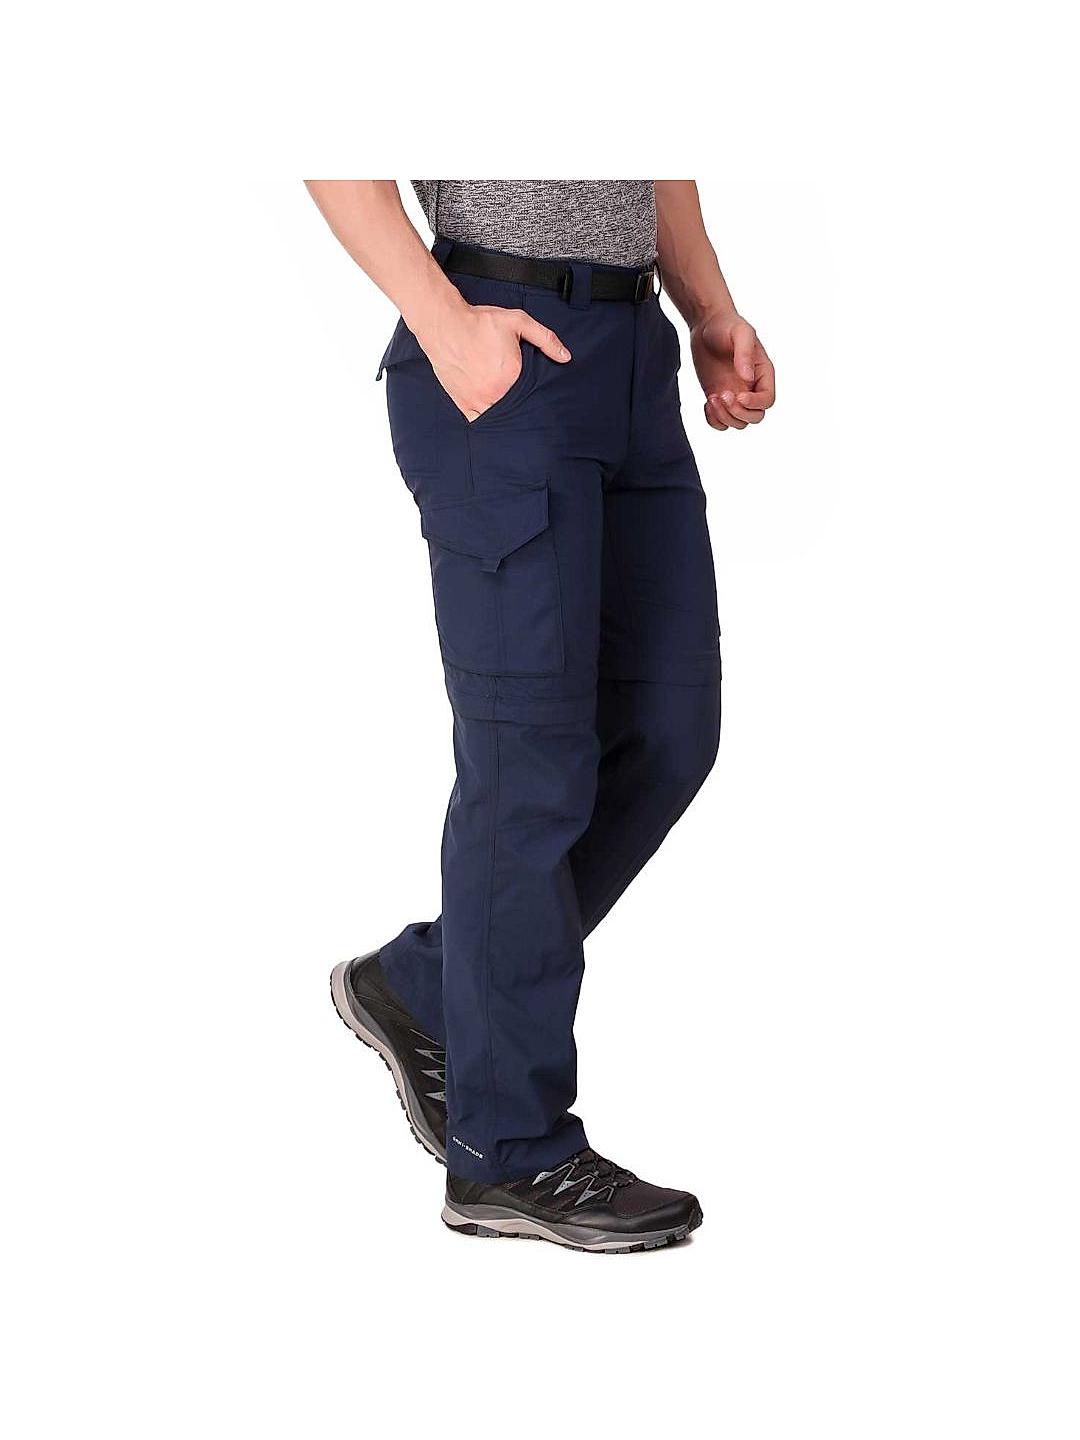 Red Kap Pants: Men's PT88 Lightweight Navy Cargo Work Pants